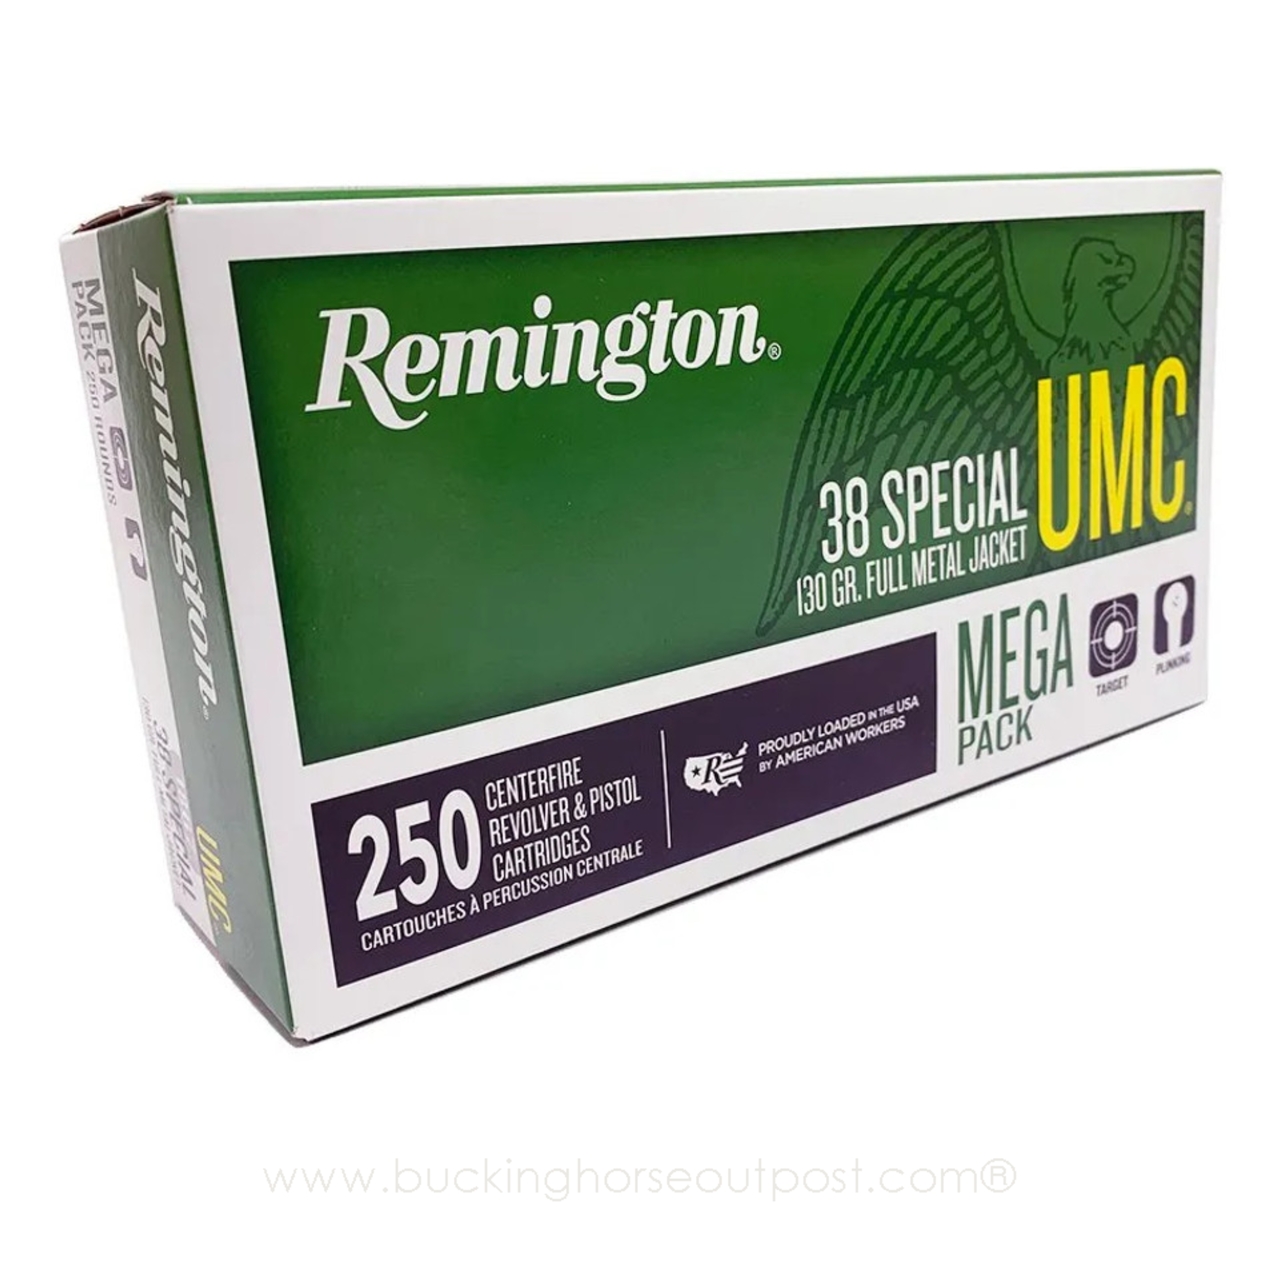 Remington UMC .223 Remington UMC 55 Grain Full Metal Jacket 1000rds Per  Case Loose (23895) FREE SHIPPING on orders over $125